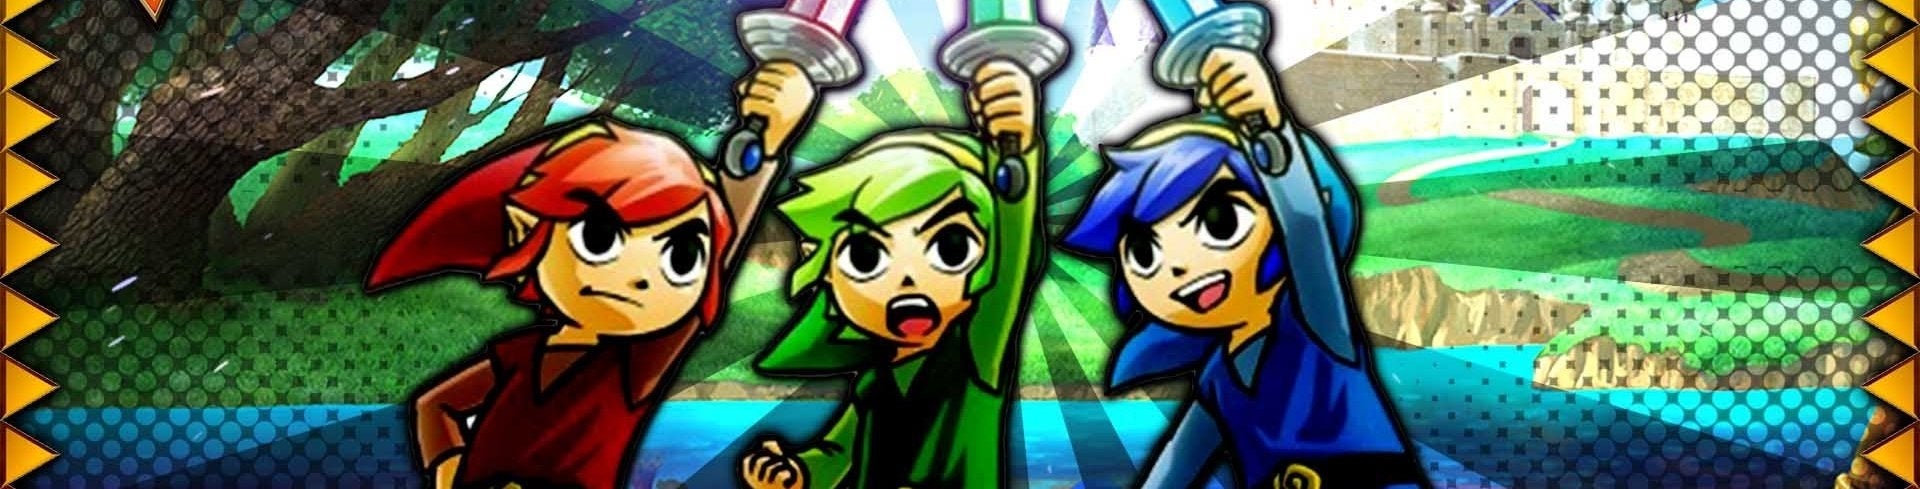 Obrazki dla The Legend of Zelda: Tri Force Heroes - Recenzja